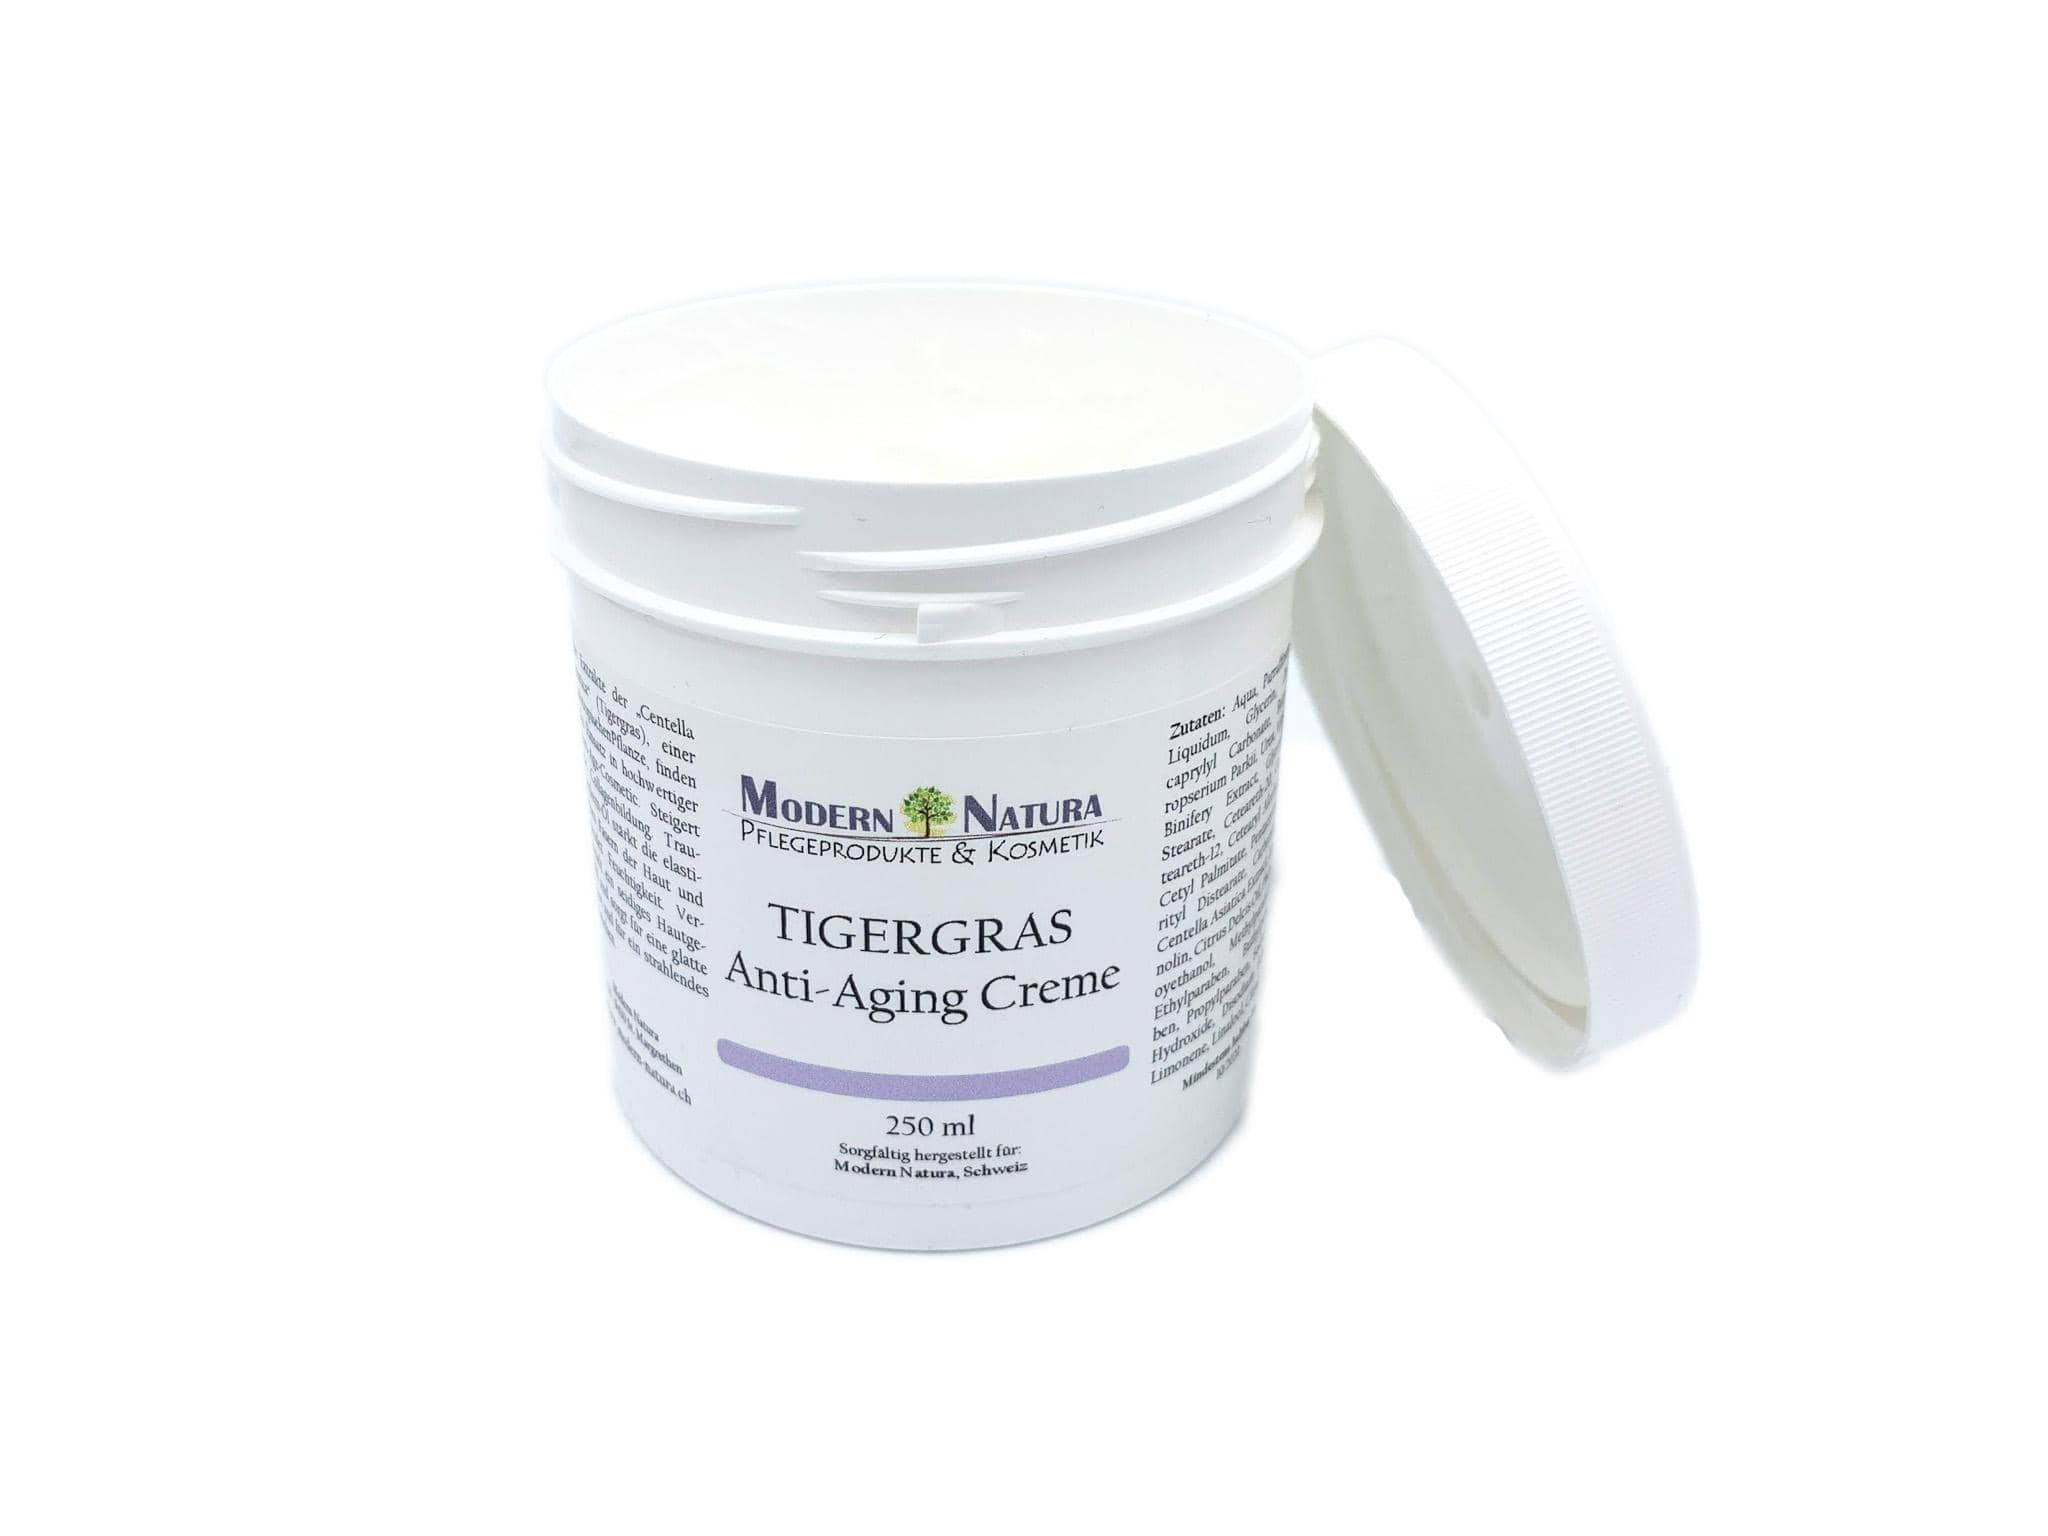 Tigergras Anti-Aging Creme (250ml Dose)